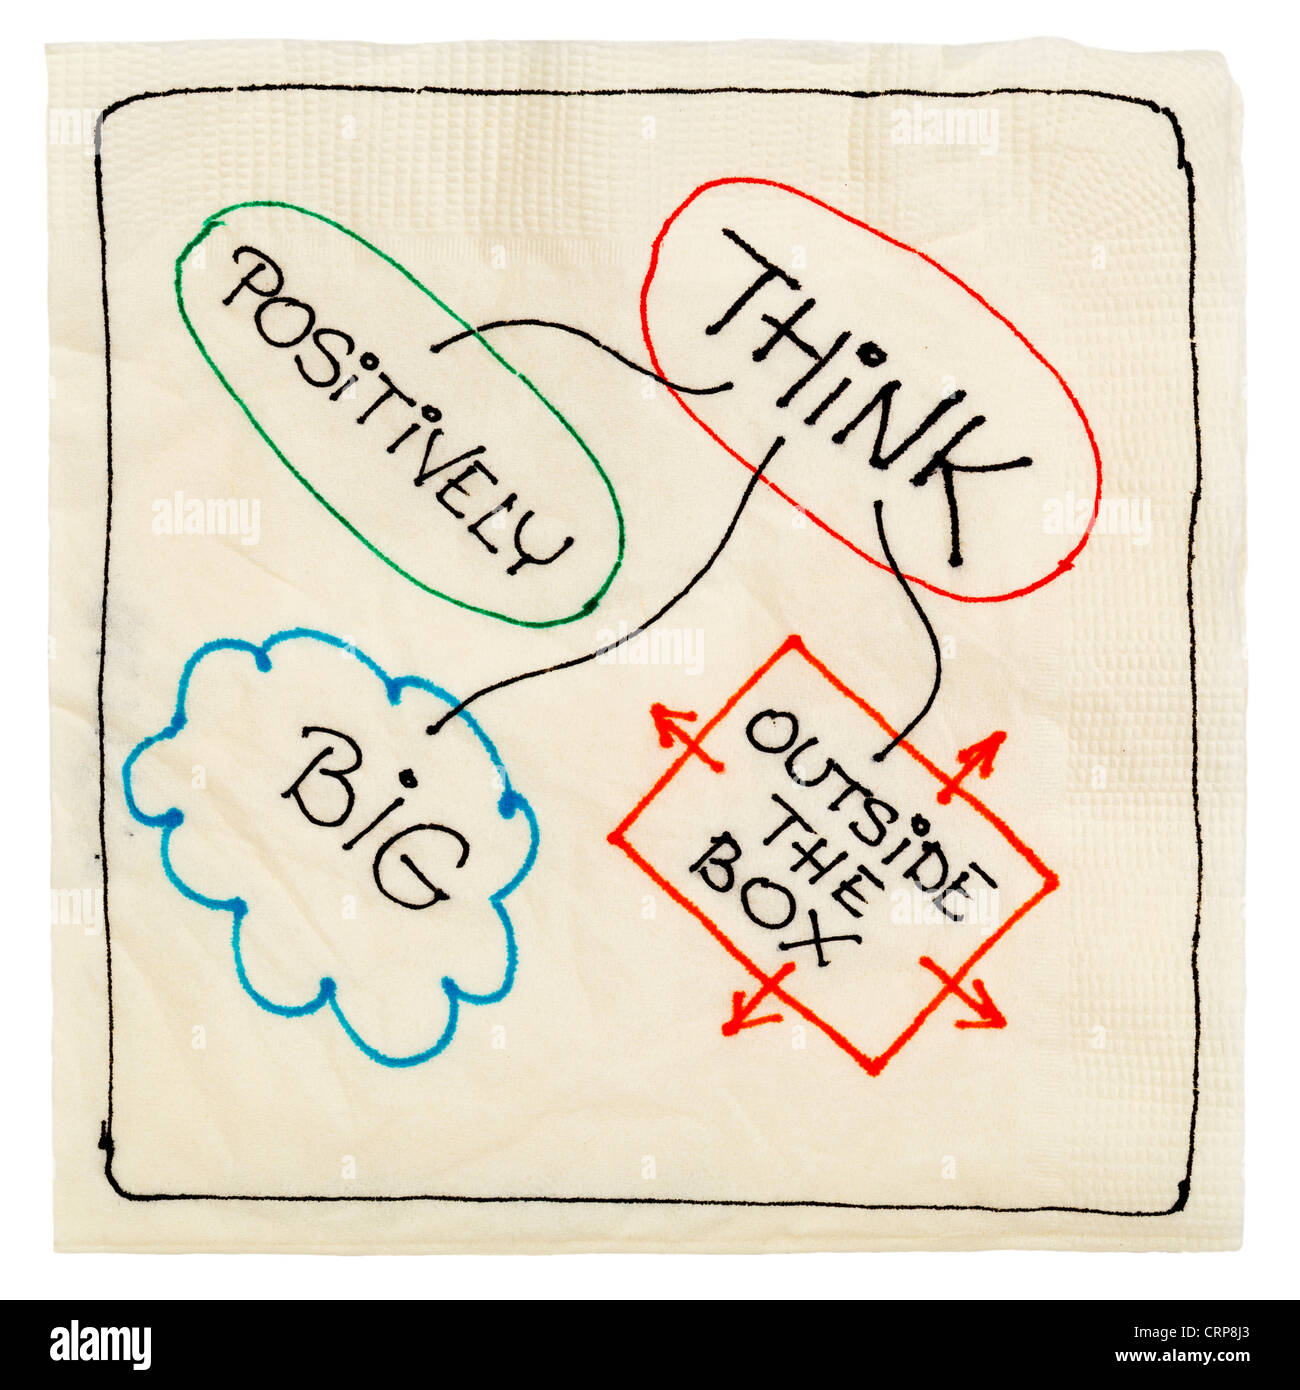 think positively, big and outside the box - motivational napkin doodle, isolated on white Stock Photo